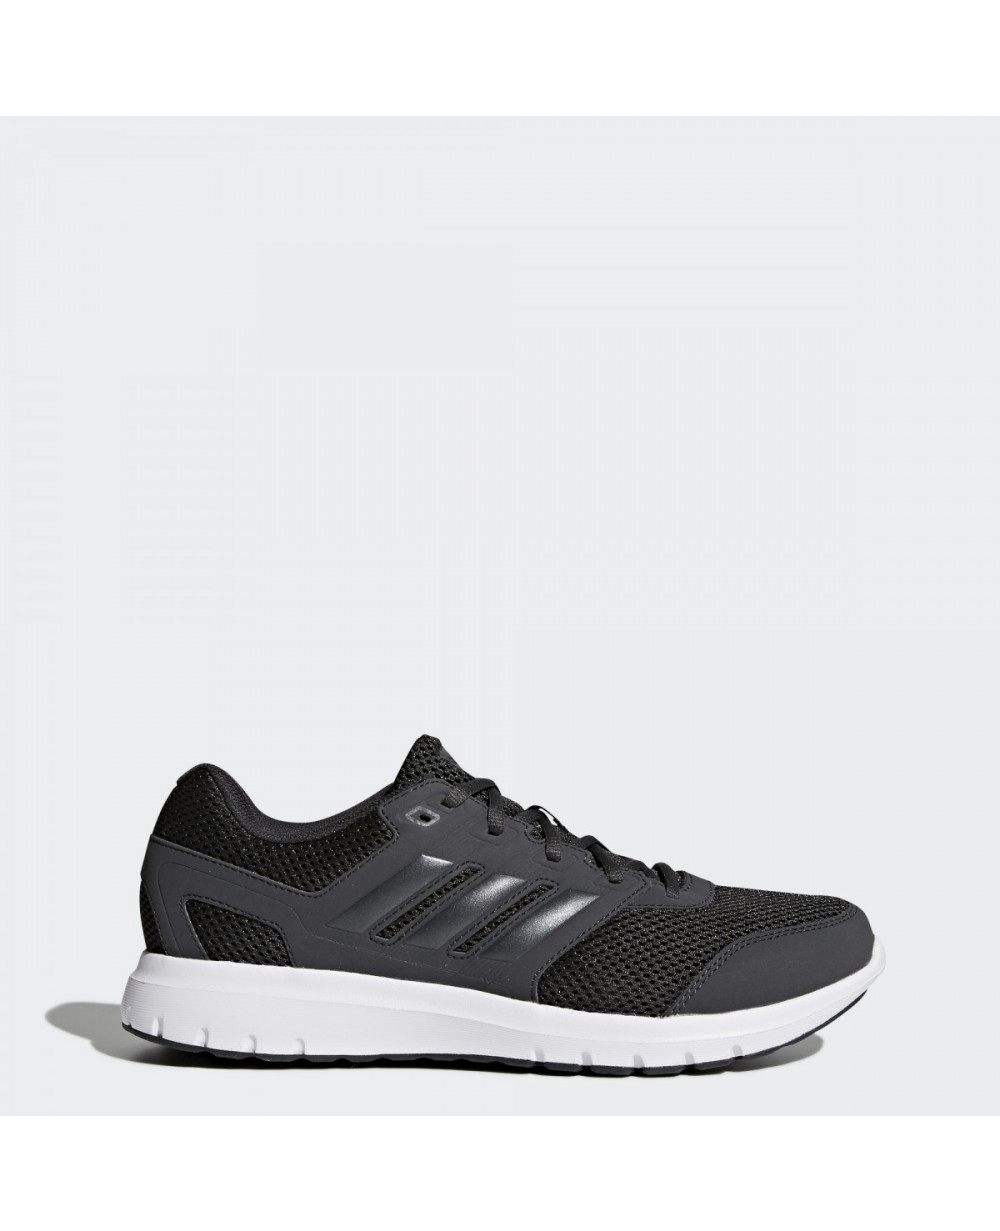 Adidas Duramo Lite 2.0 Black/White Men Running Shoes CG4044